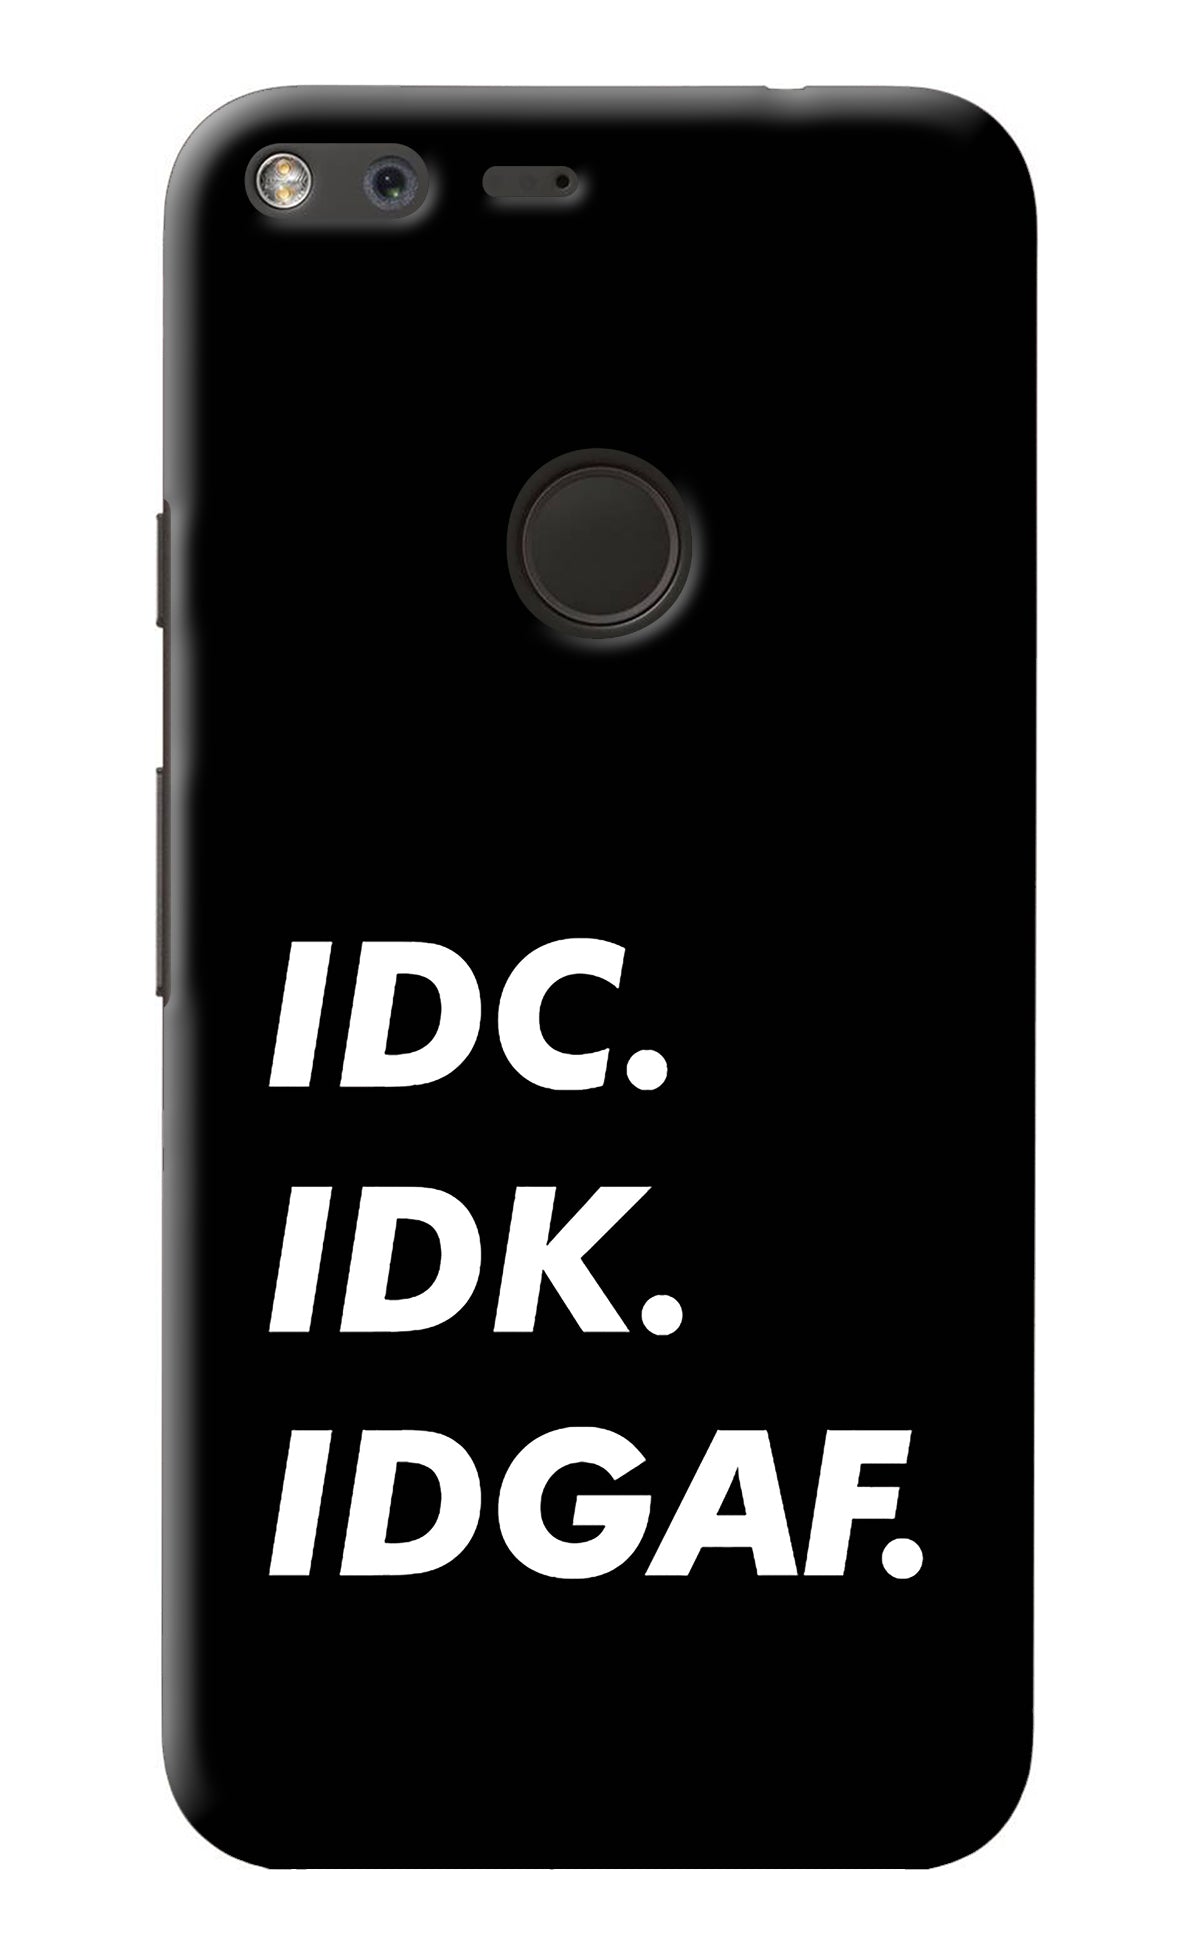 Idc Idk Idgaf Google Pixel XL Back Cover